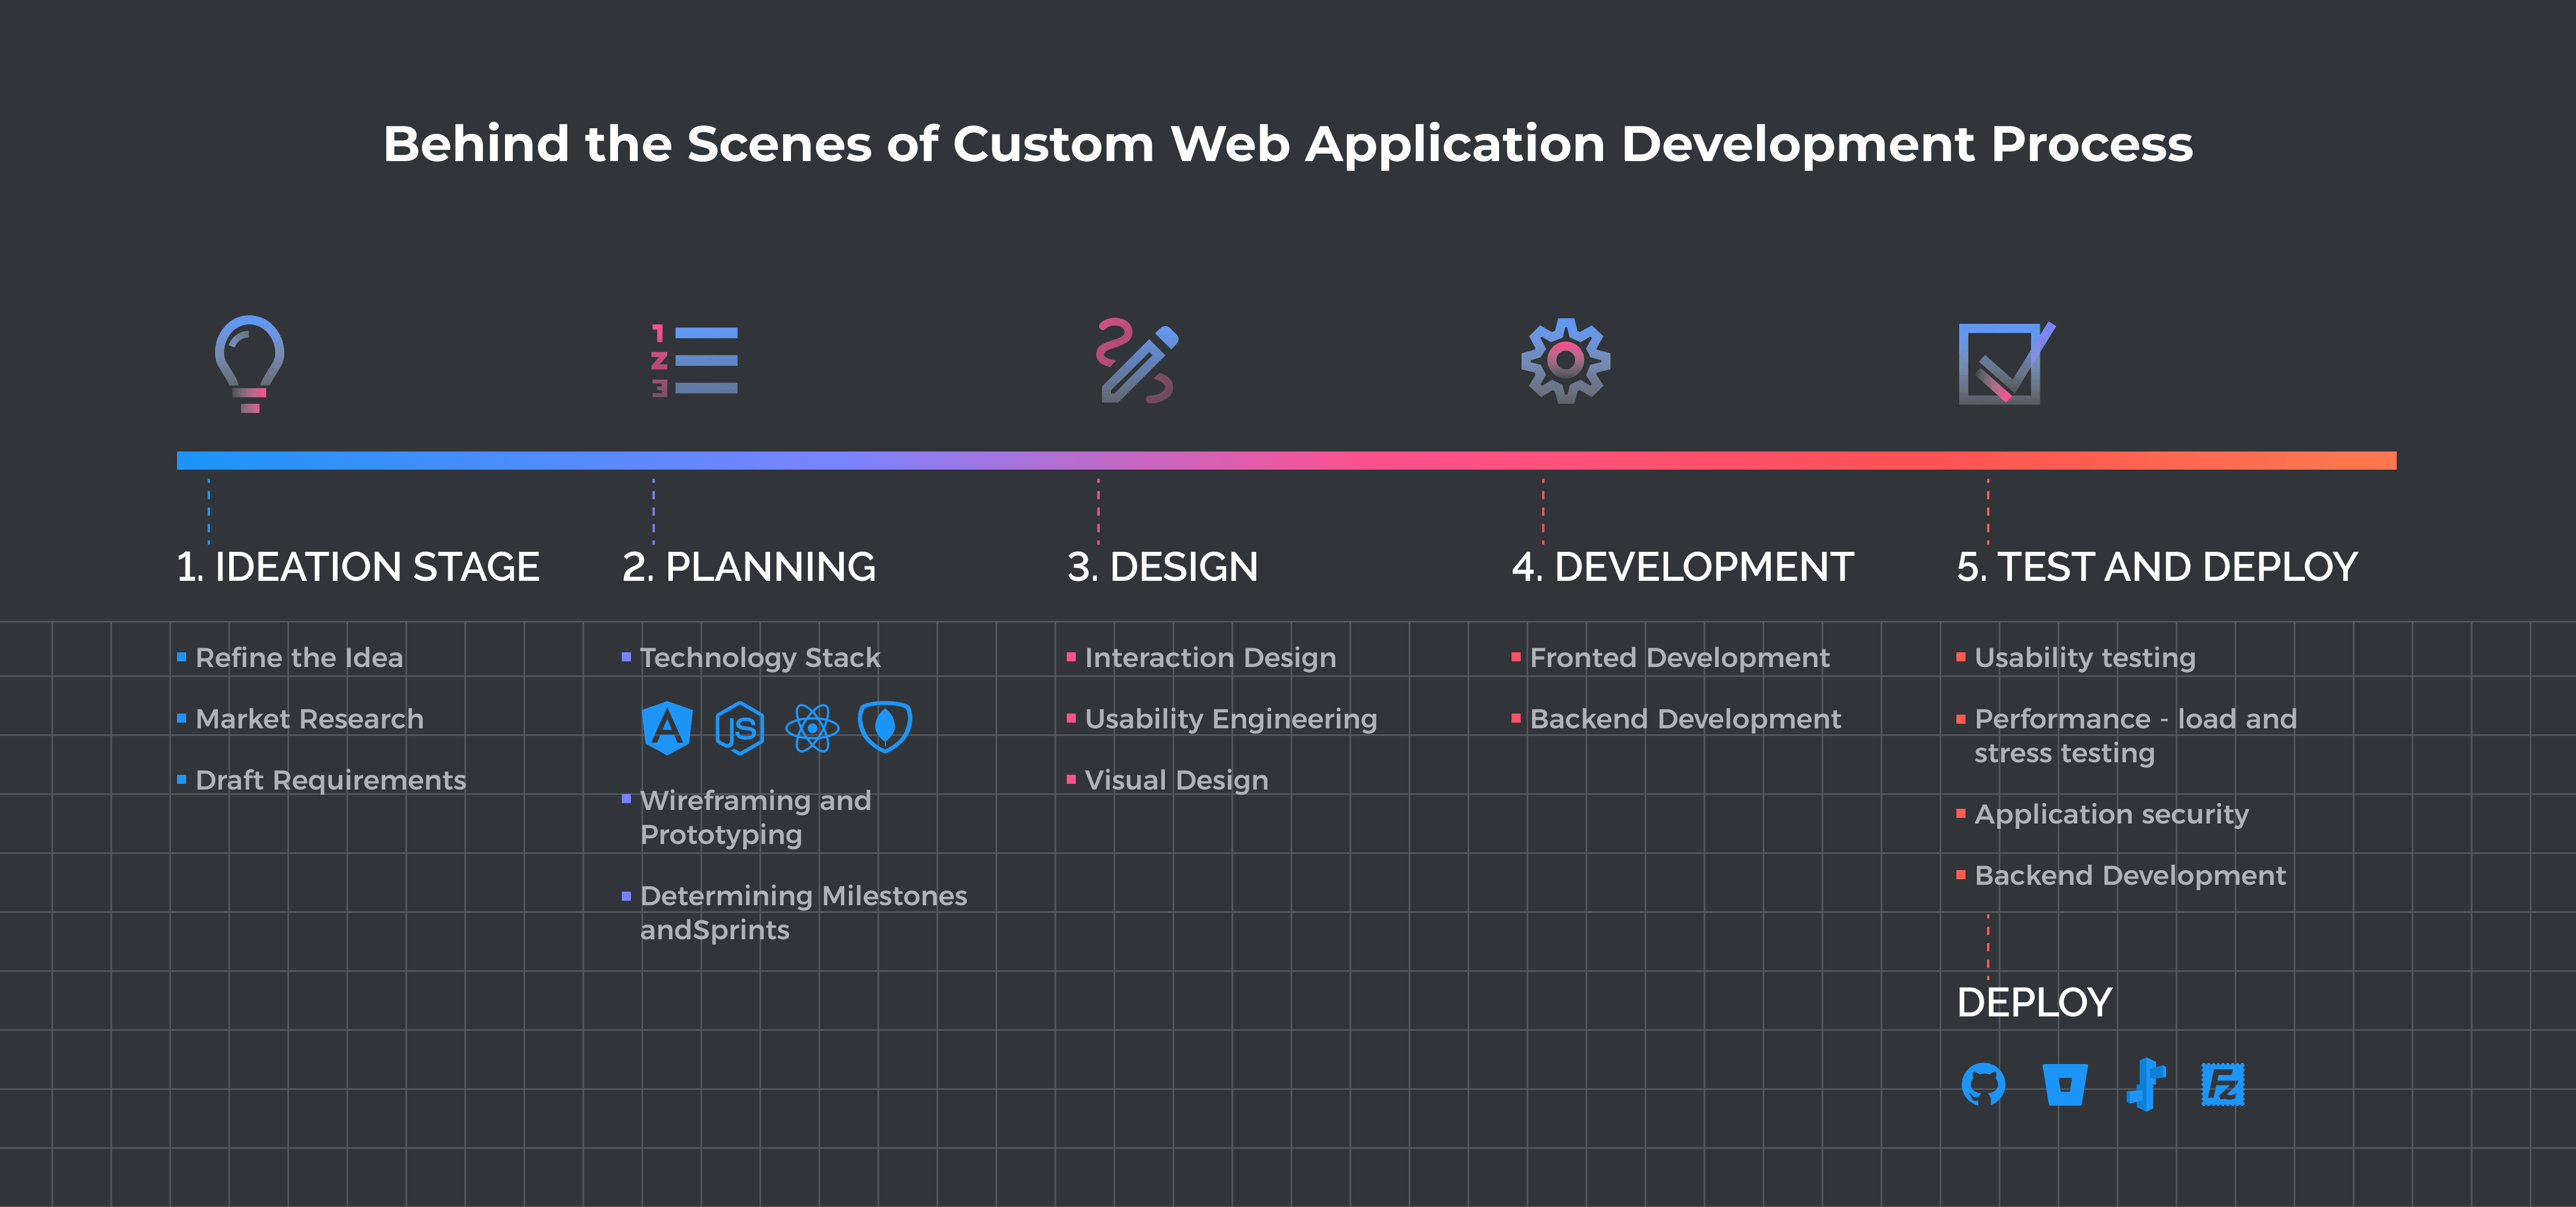 Behind the Scenes of Custom Web Application Development Process